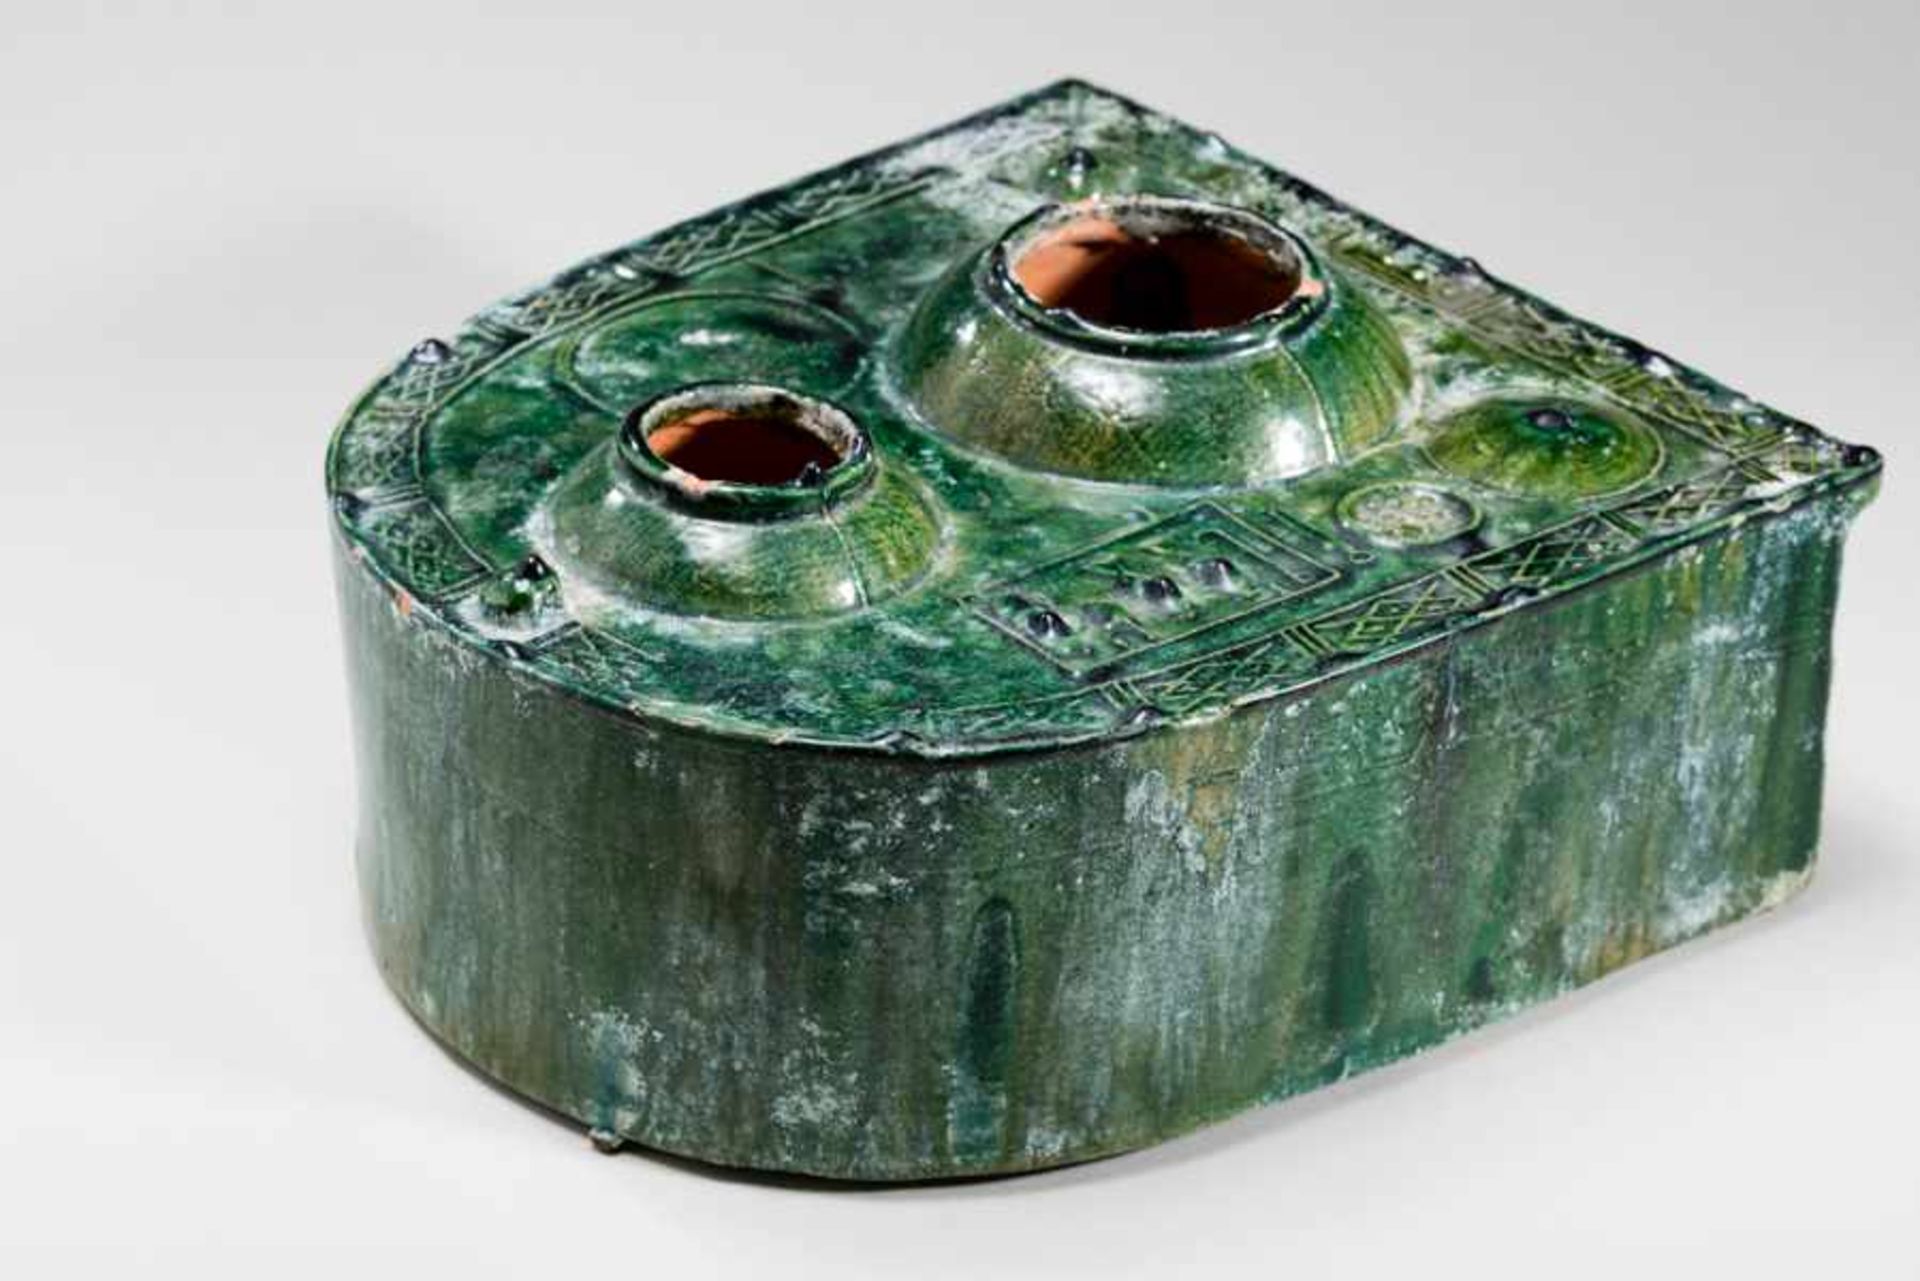 OVEN Glazed ceramic. China, Han dynasty (206 BCE - 220 CE)陶爐Fine, slightly curved form. Fascinating,